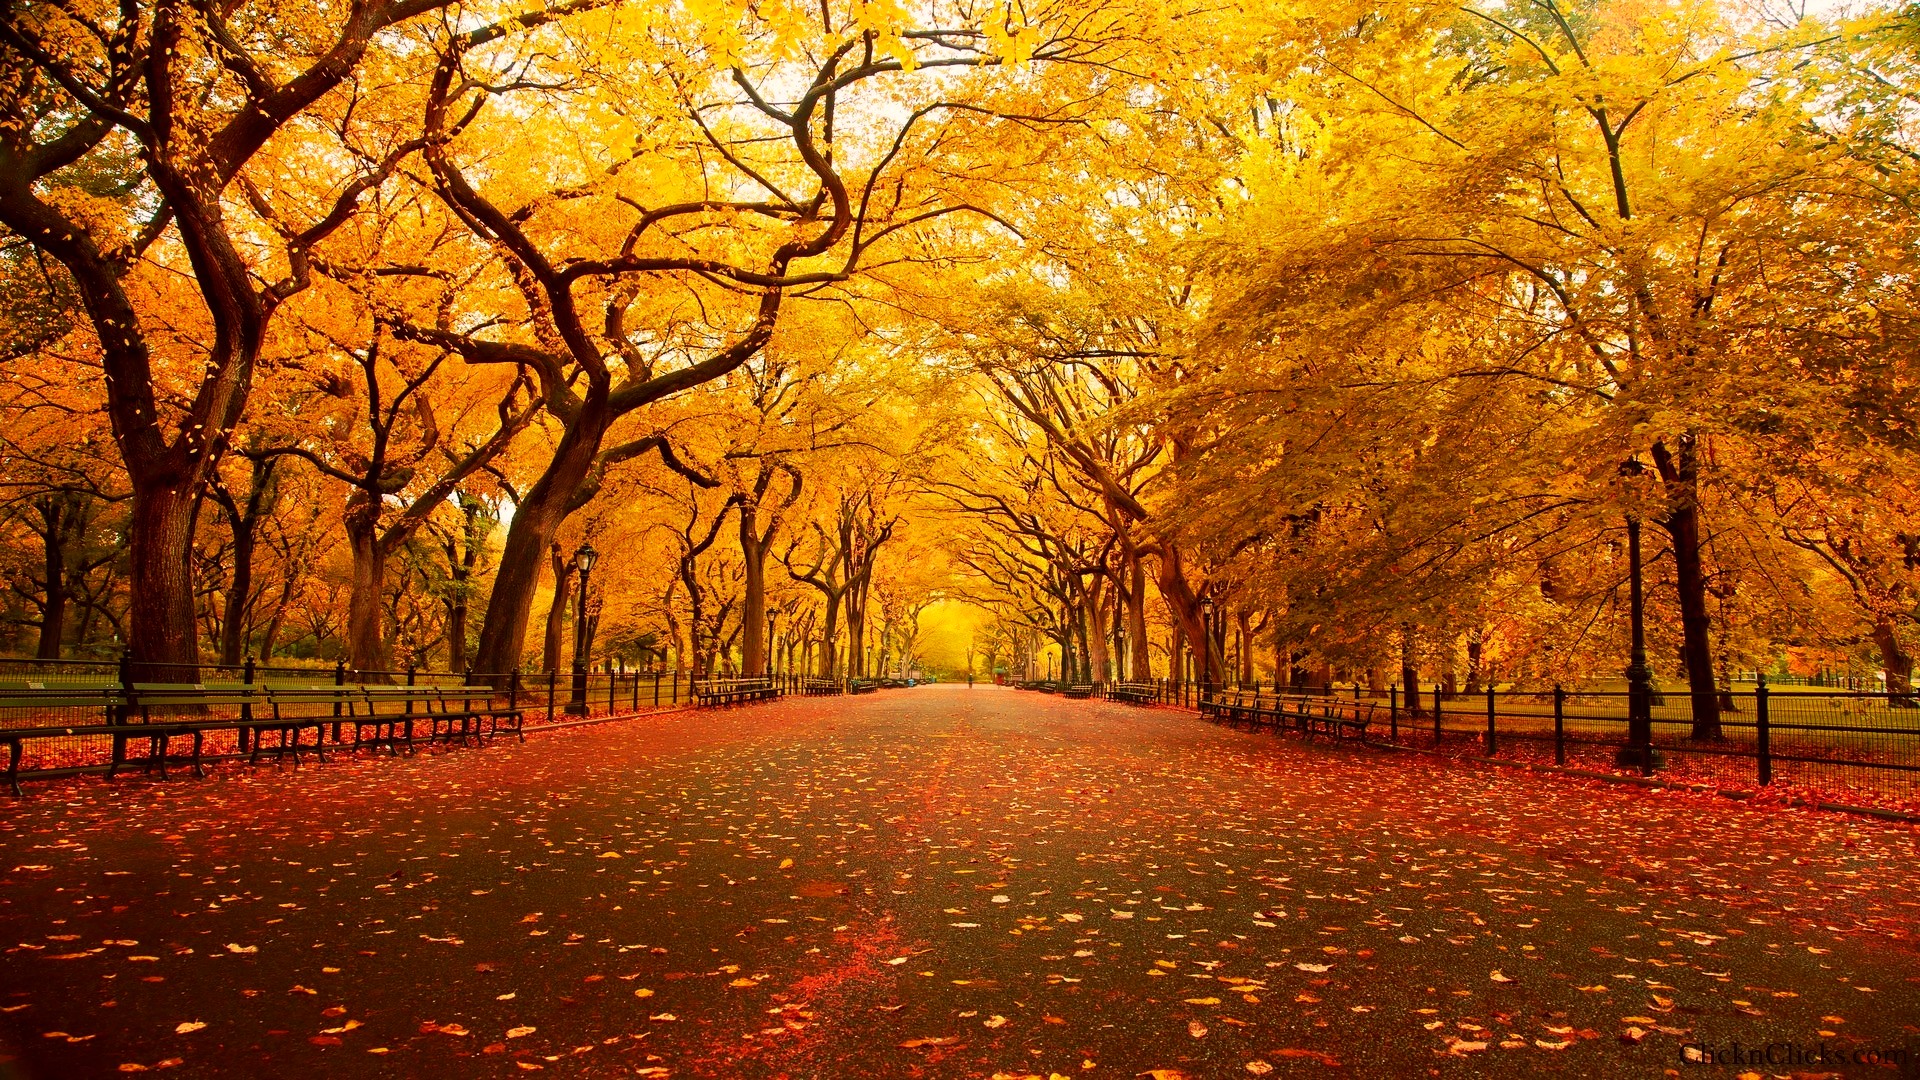 Autumn in Central Park New York City. Central Park New York